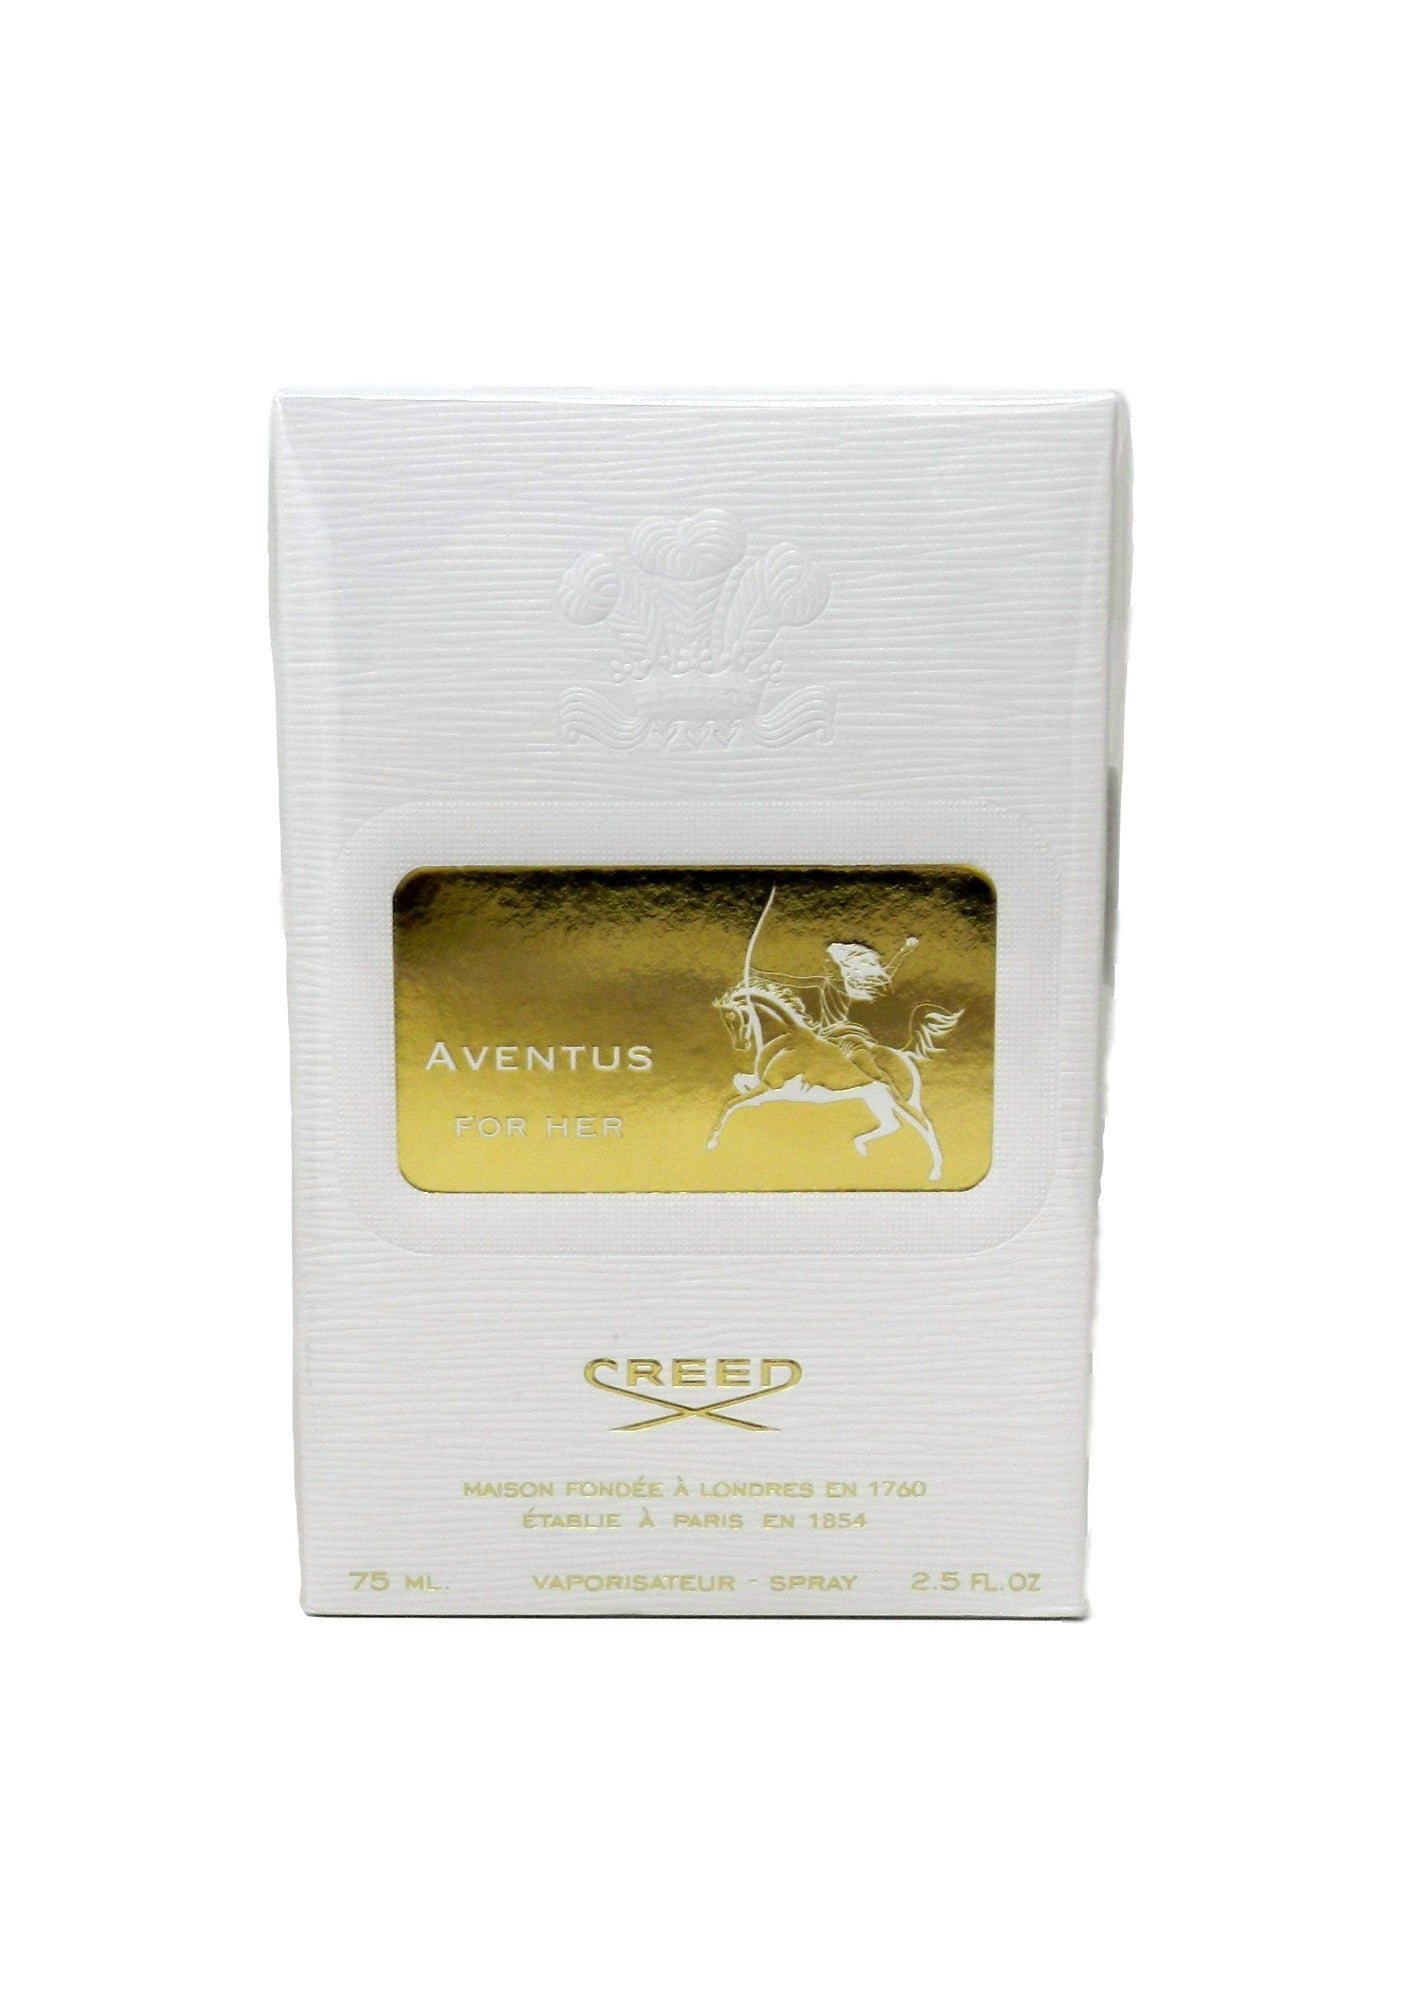 Creed Aventus For Her Eau Cosmetics De Ounce – 2.5 Parfum Perfect Skin Spray